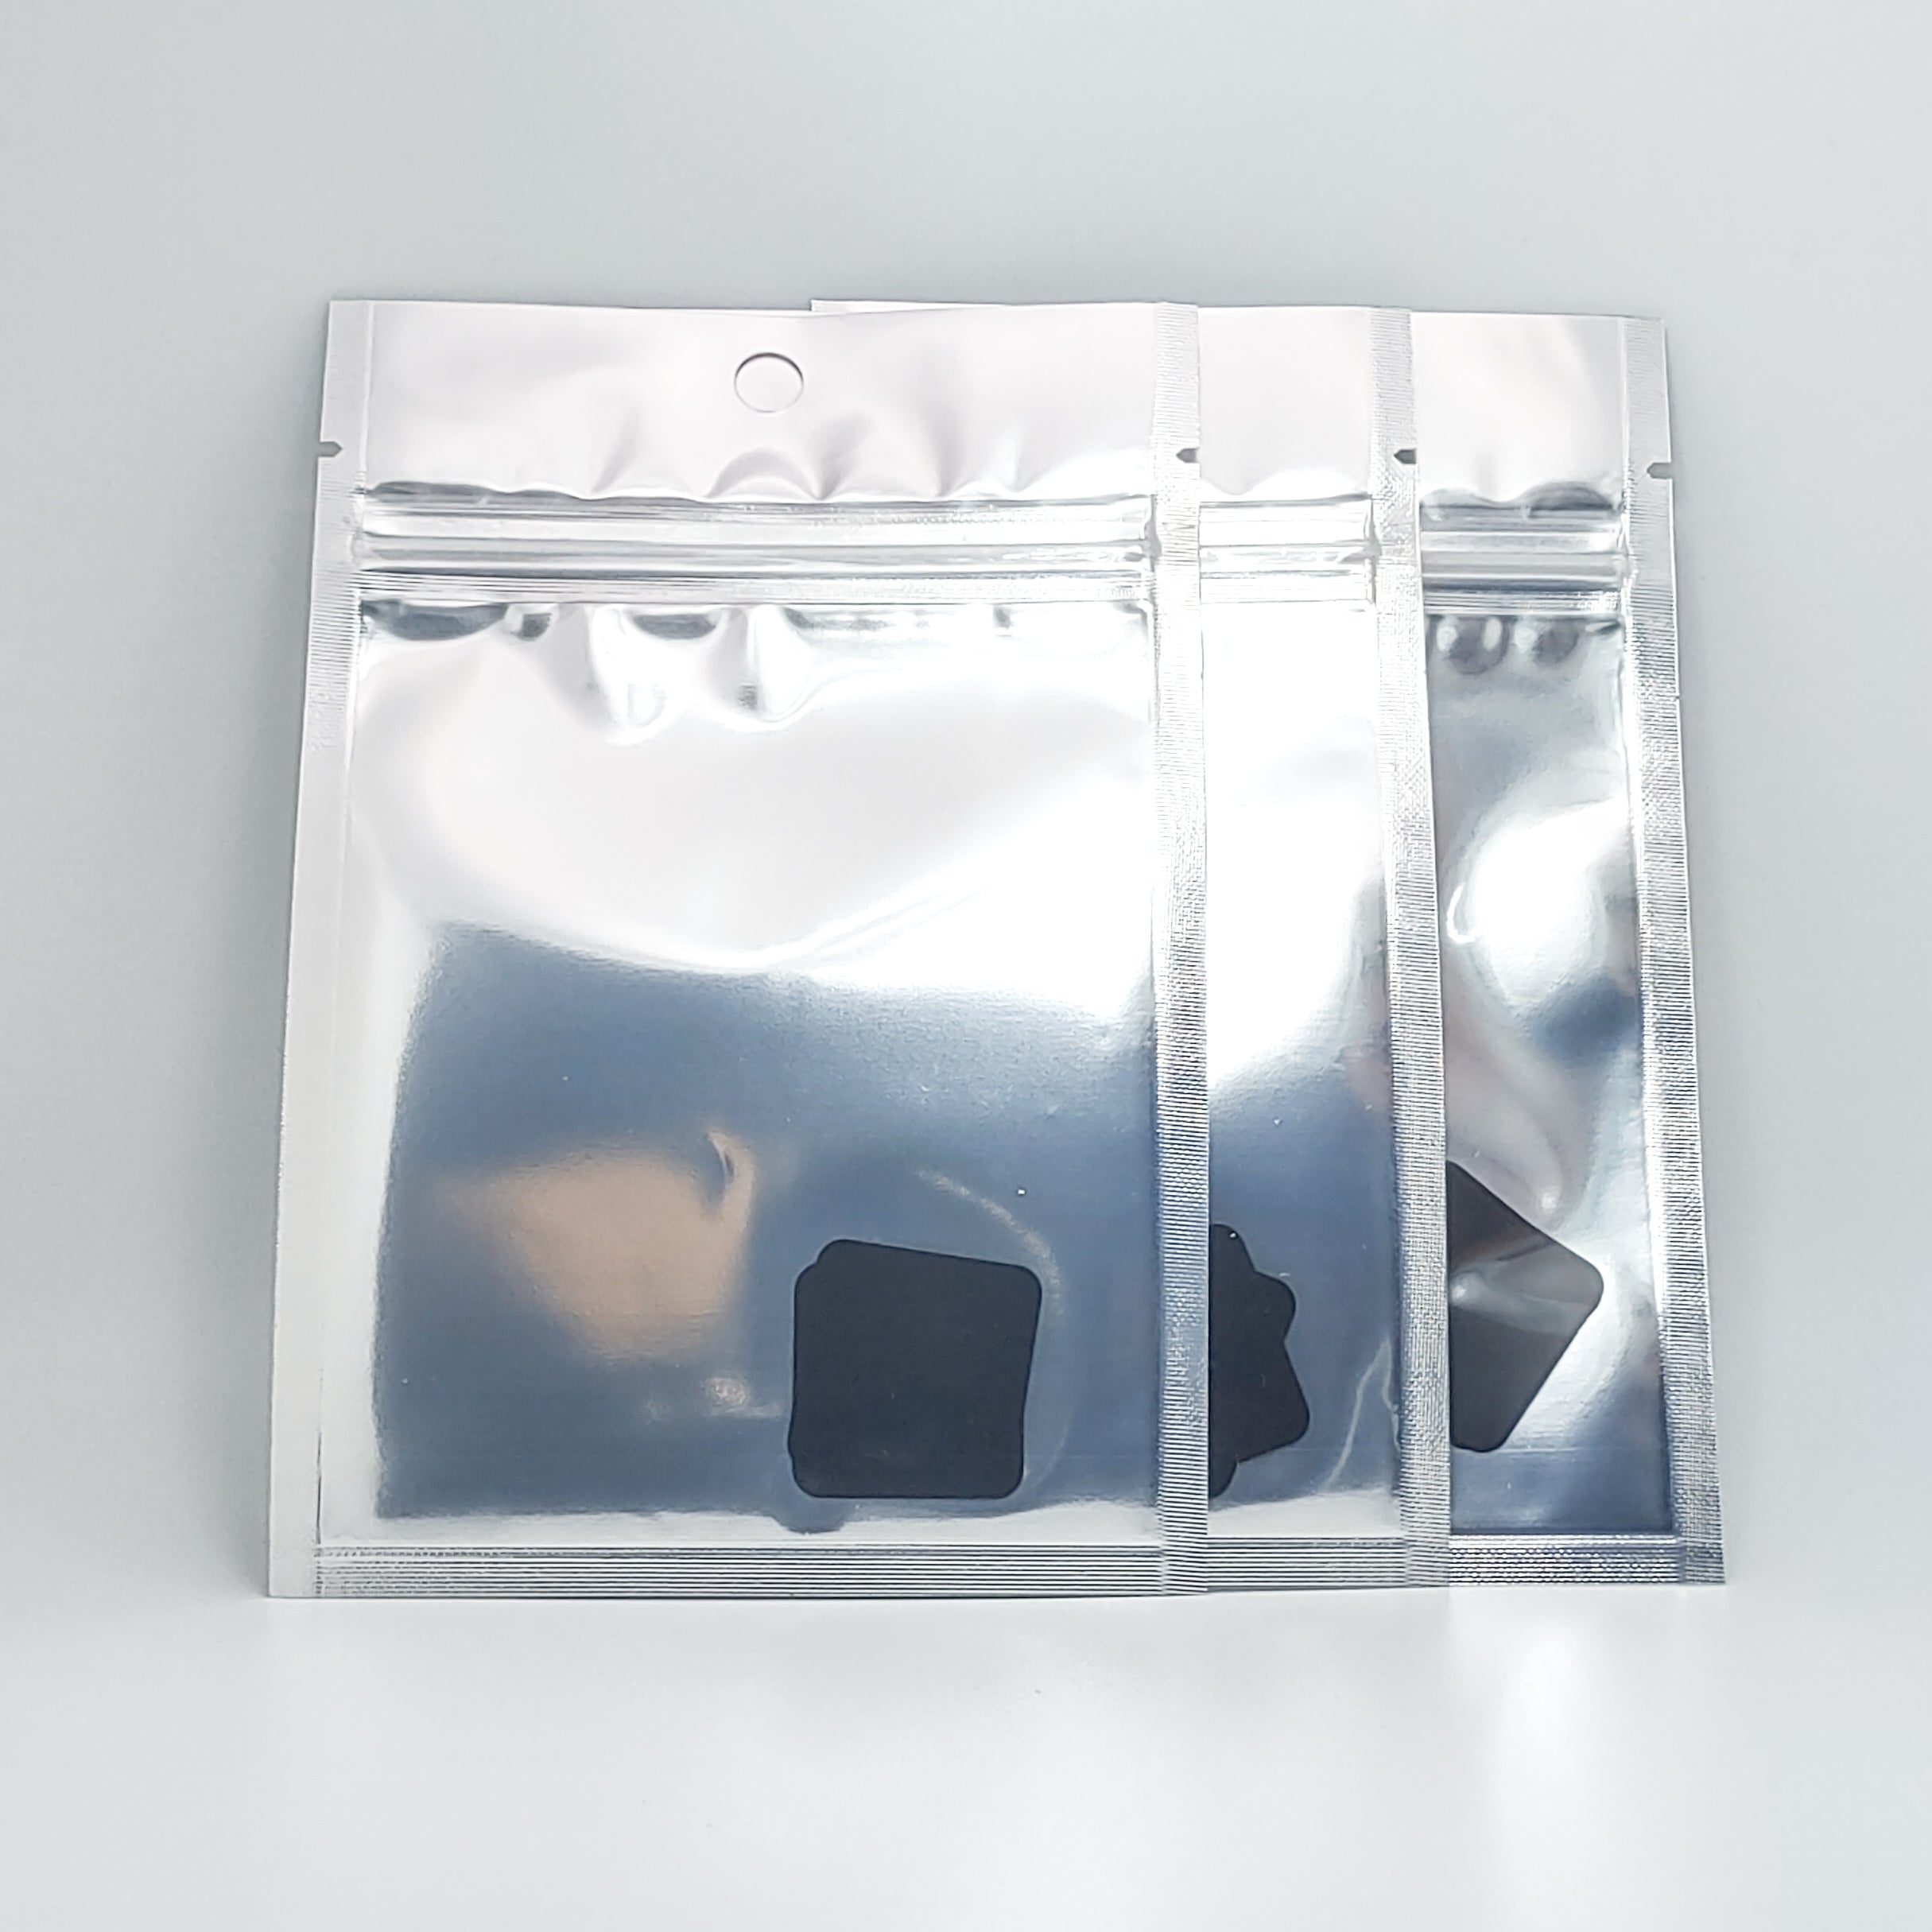 1 Set of Jewelry Anti-oxidation Storage Bags Small Jewelry Clear